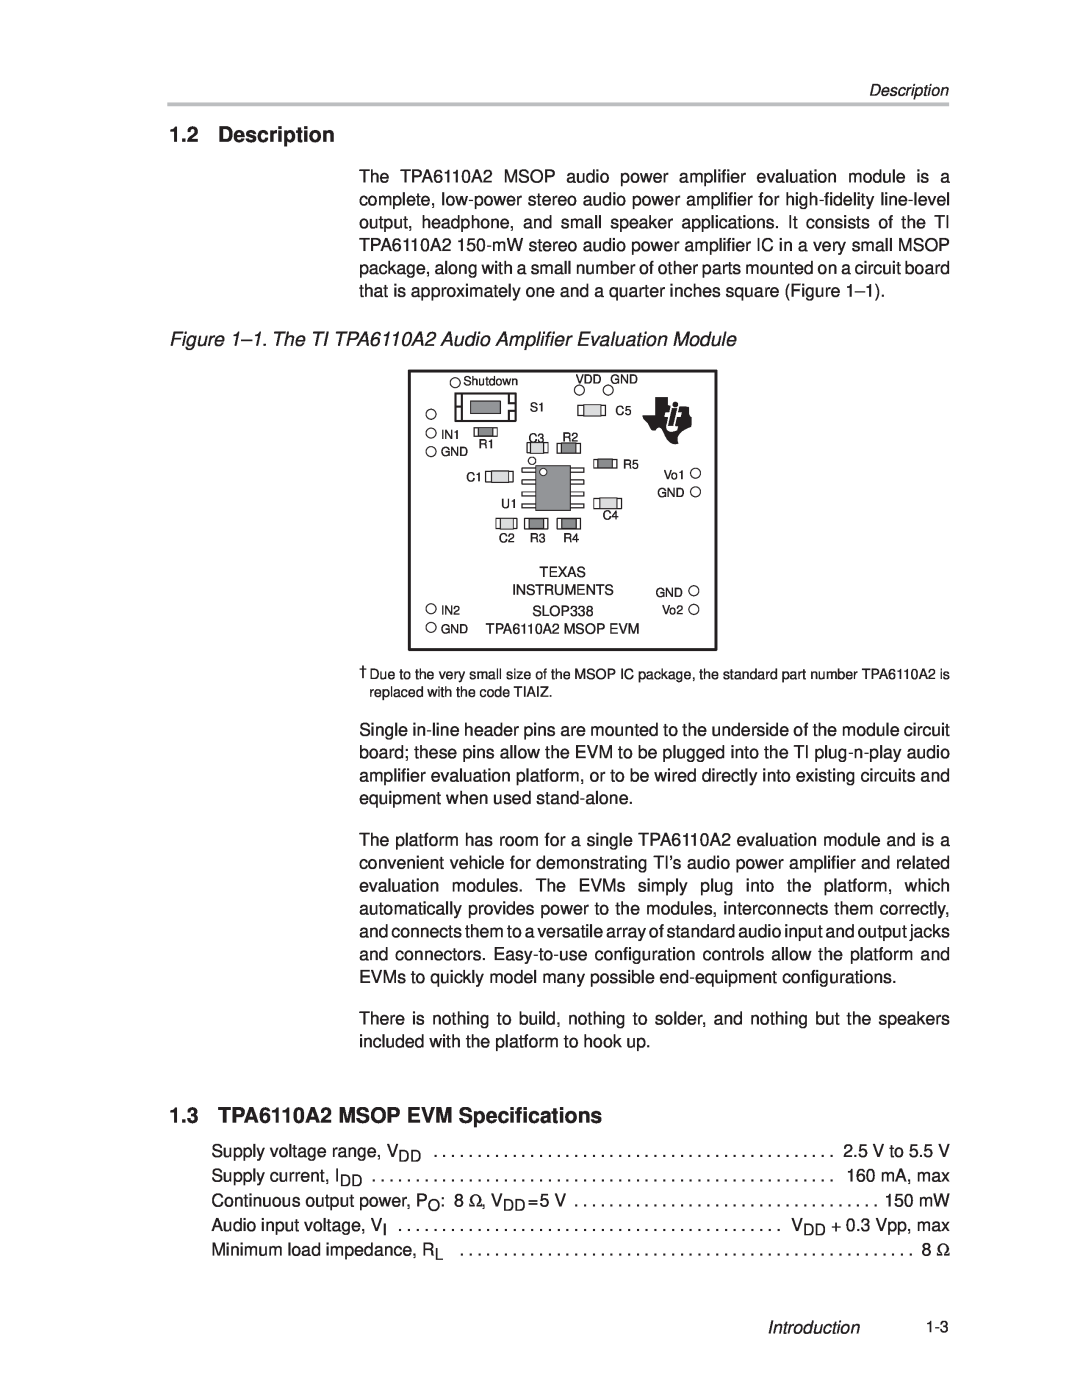 Texas Instruments manual Description, 1.3 TPA6110A2 MSOP EVM Specifications, Introduction 